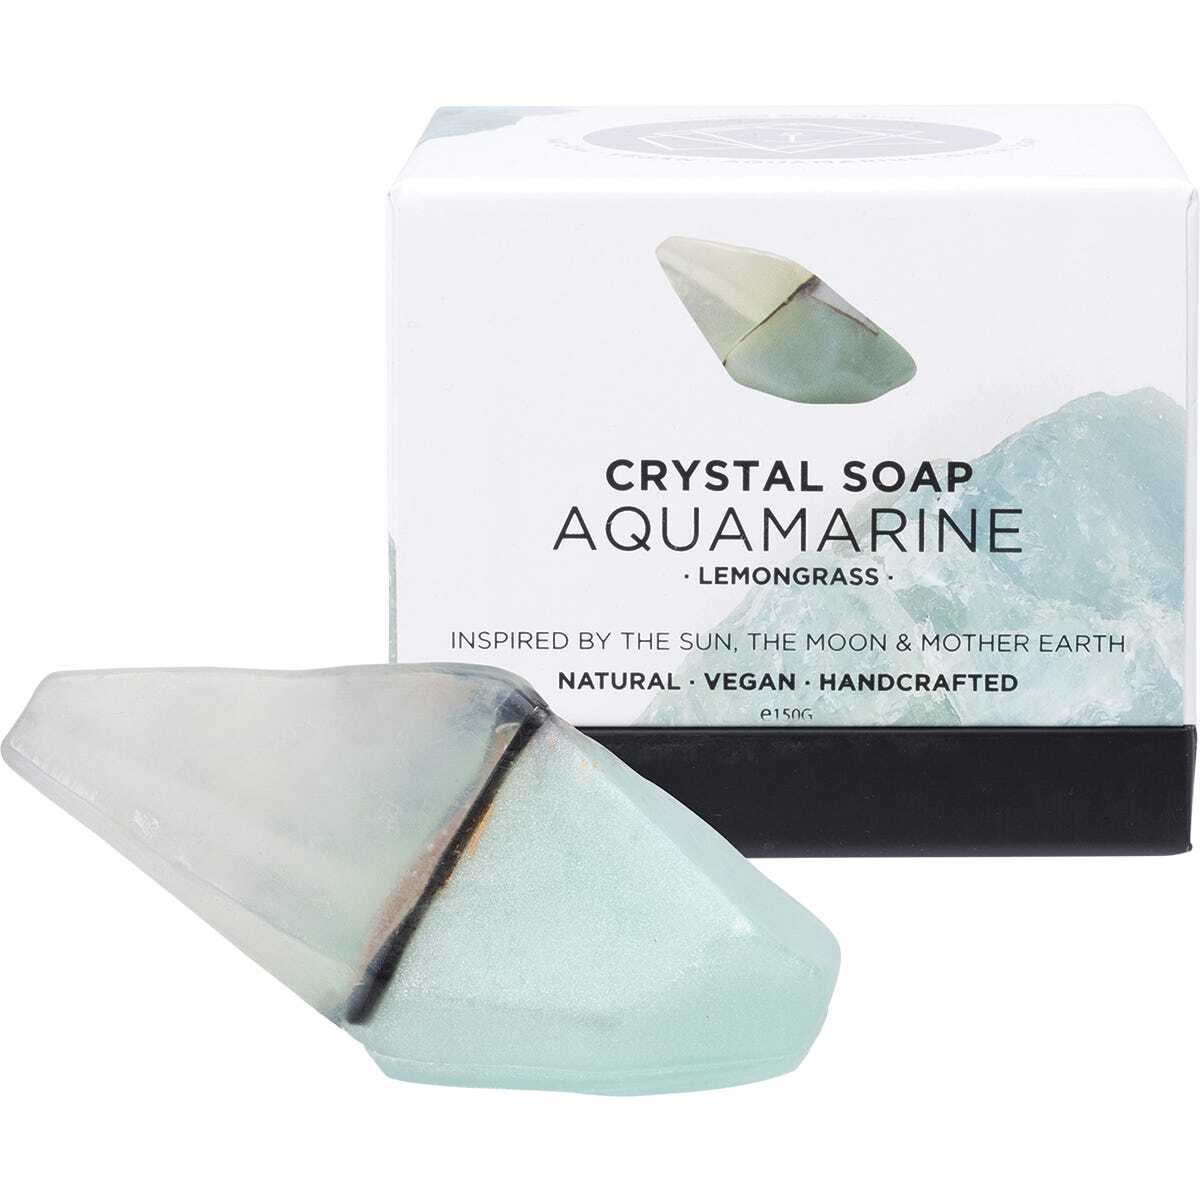 Aquamarine Crystal Soap 155g